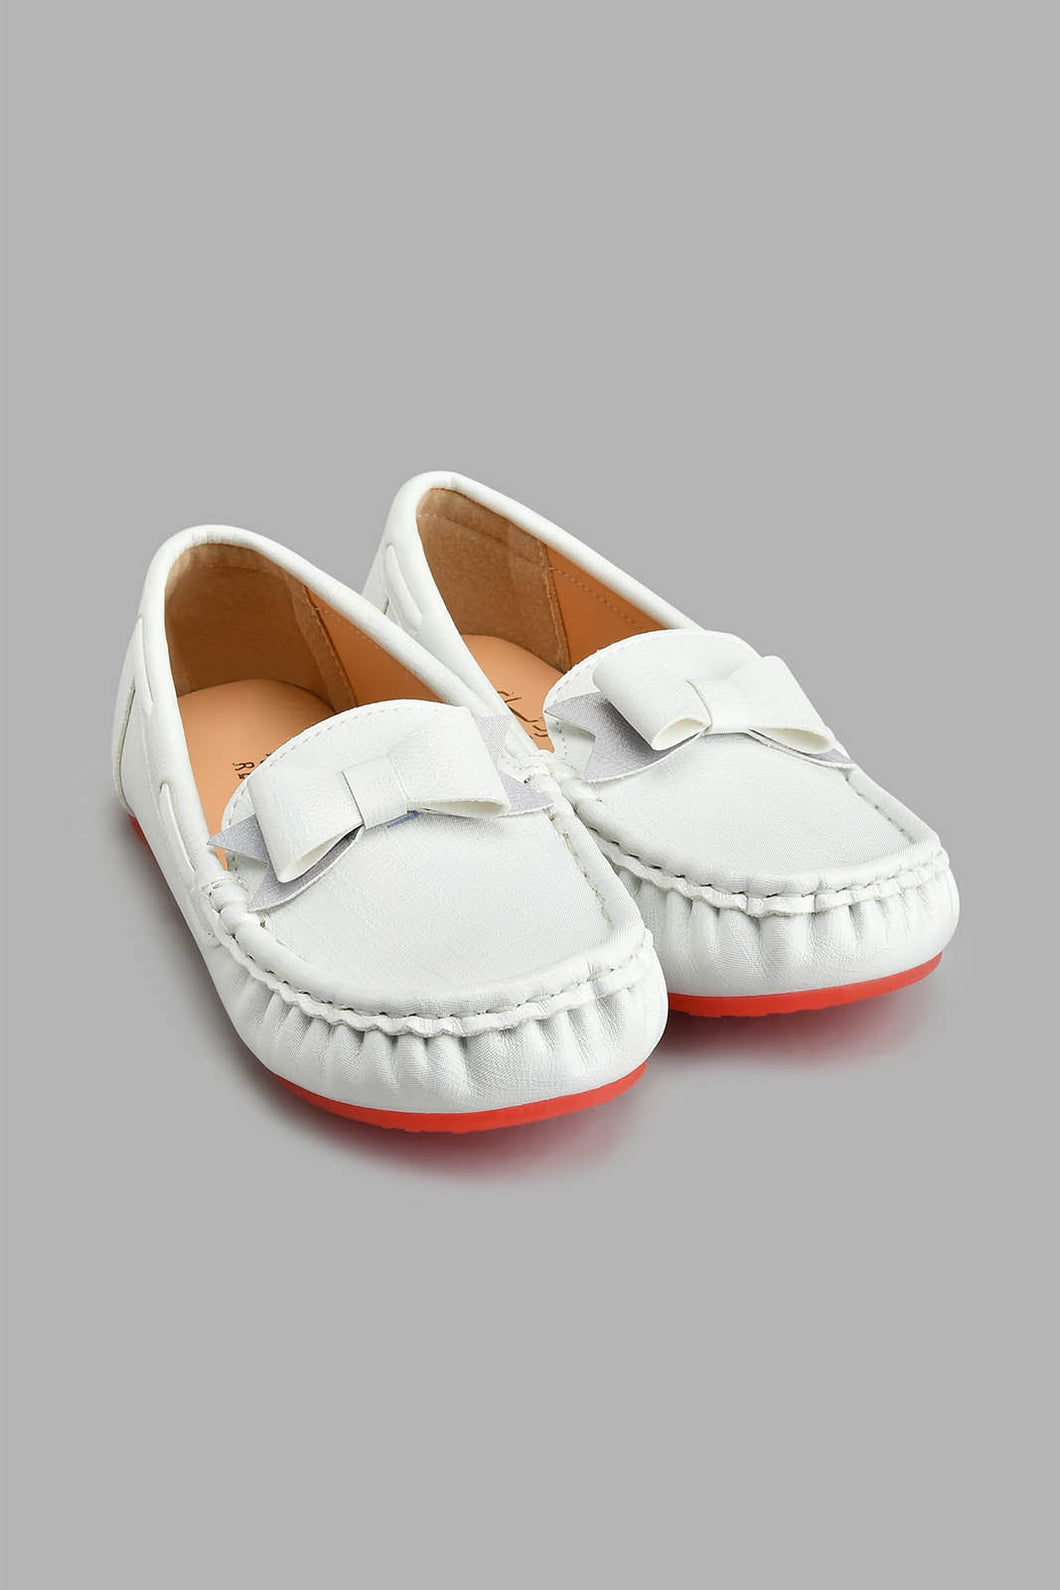 White Bow Trim Moccasin حذاء باللون الأبيض بفيونكة